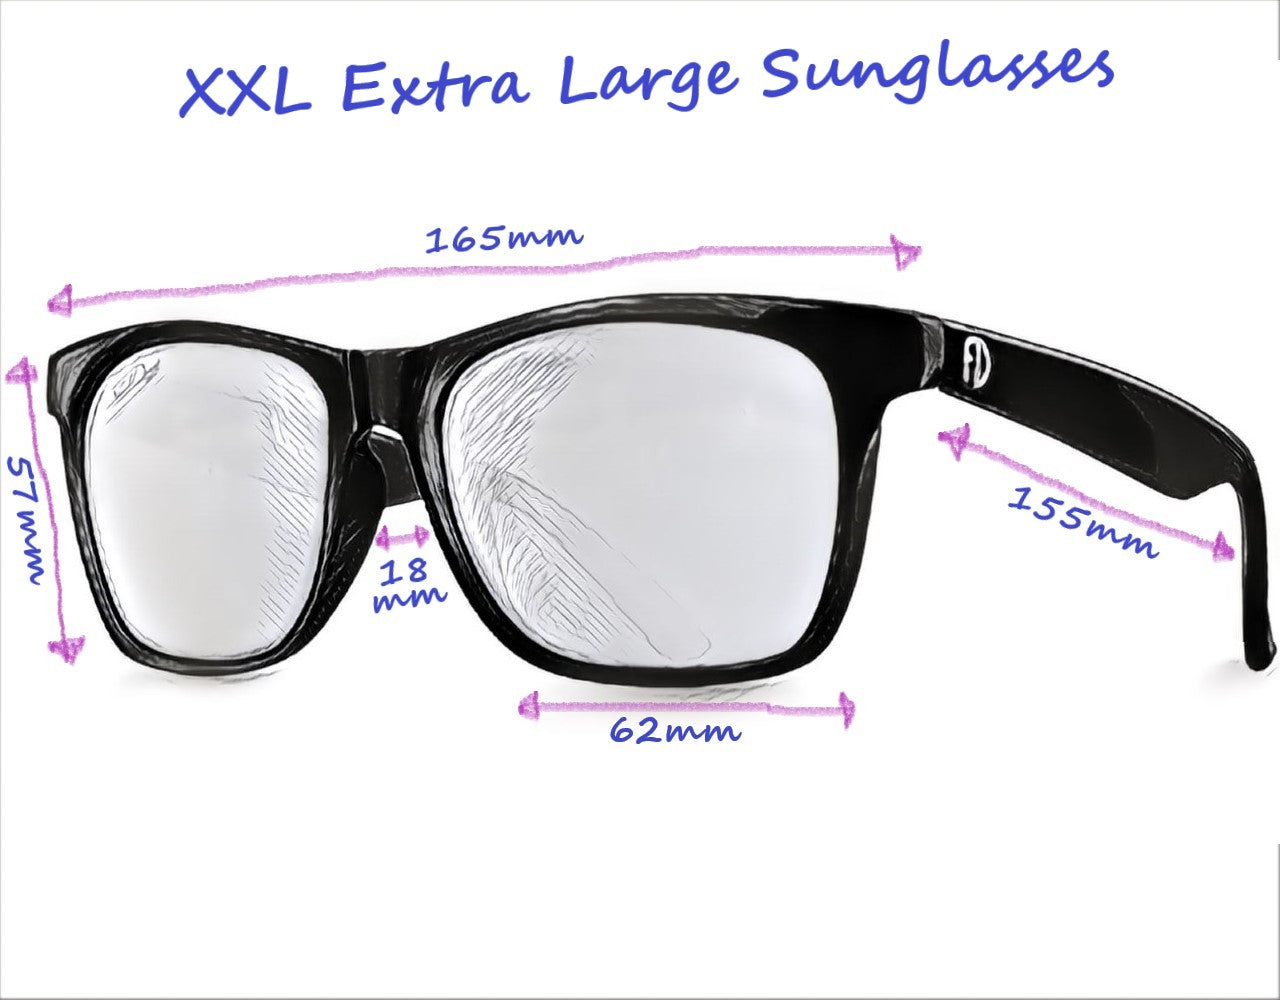 XXL Prescription Glasses/Sunglasses for Big Heads, Clear Frame 165mm